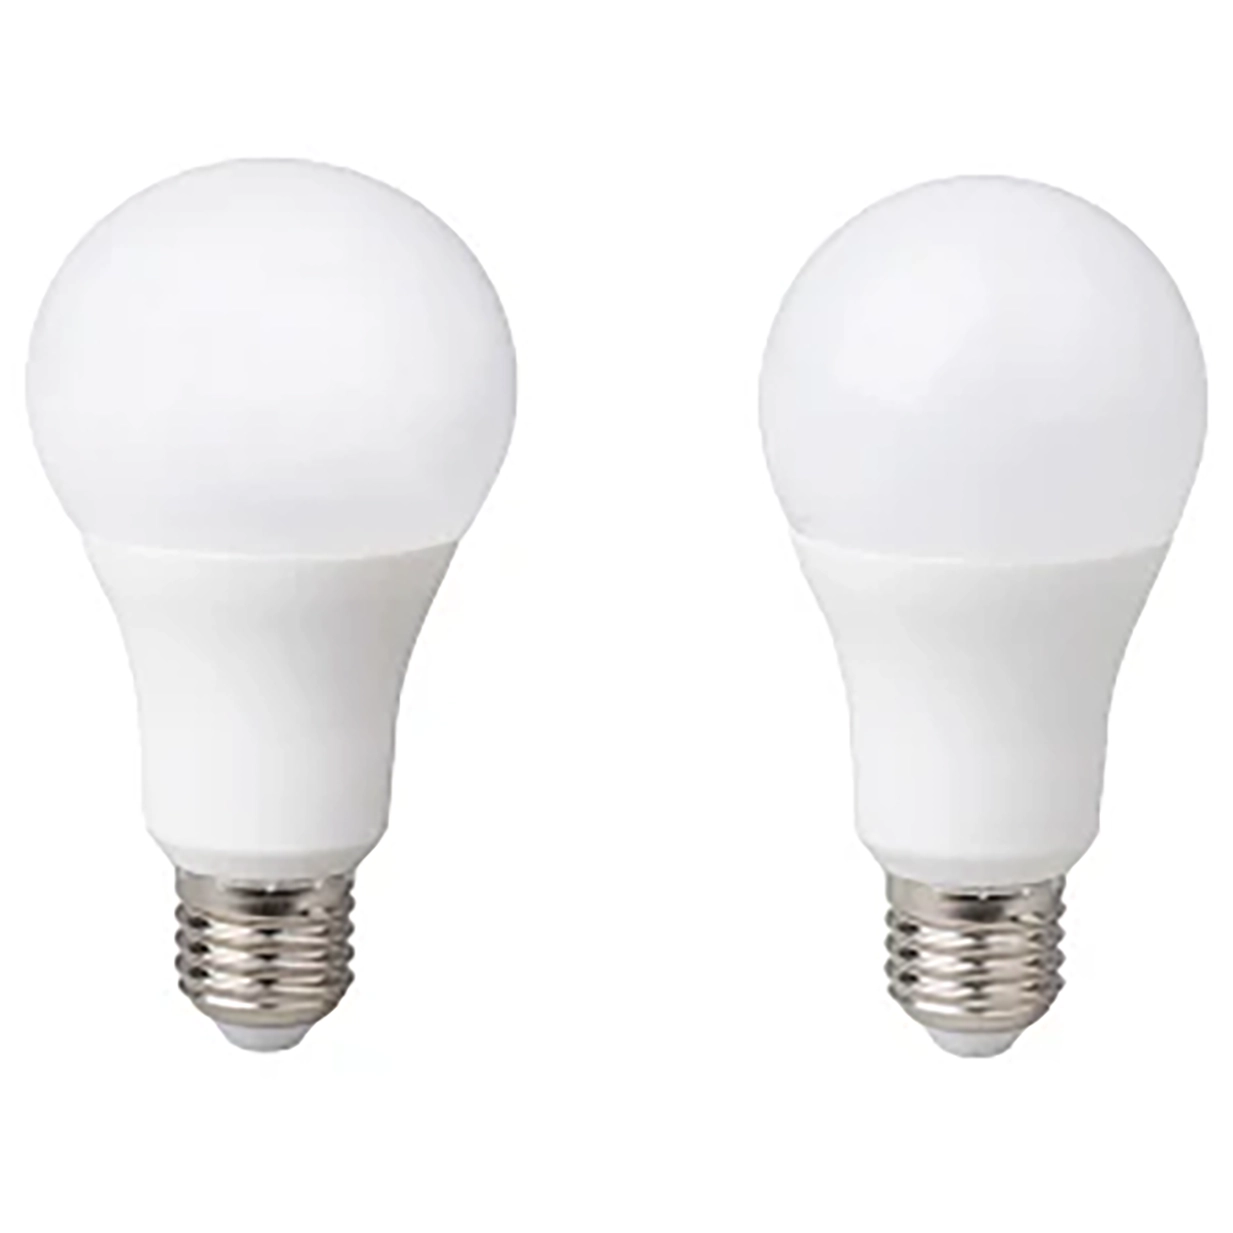 Factory Price Indoor Lighting Type A bulb lamp